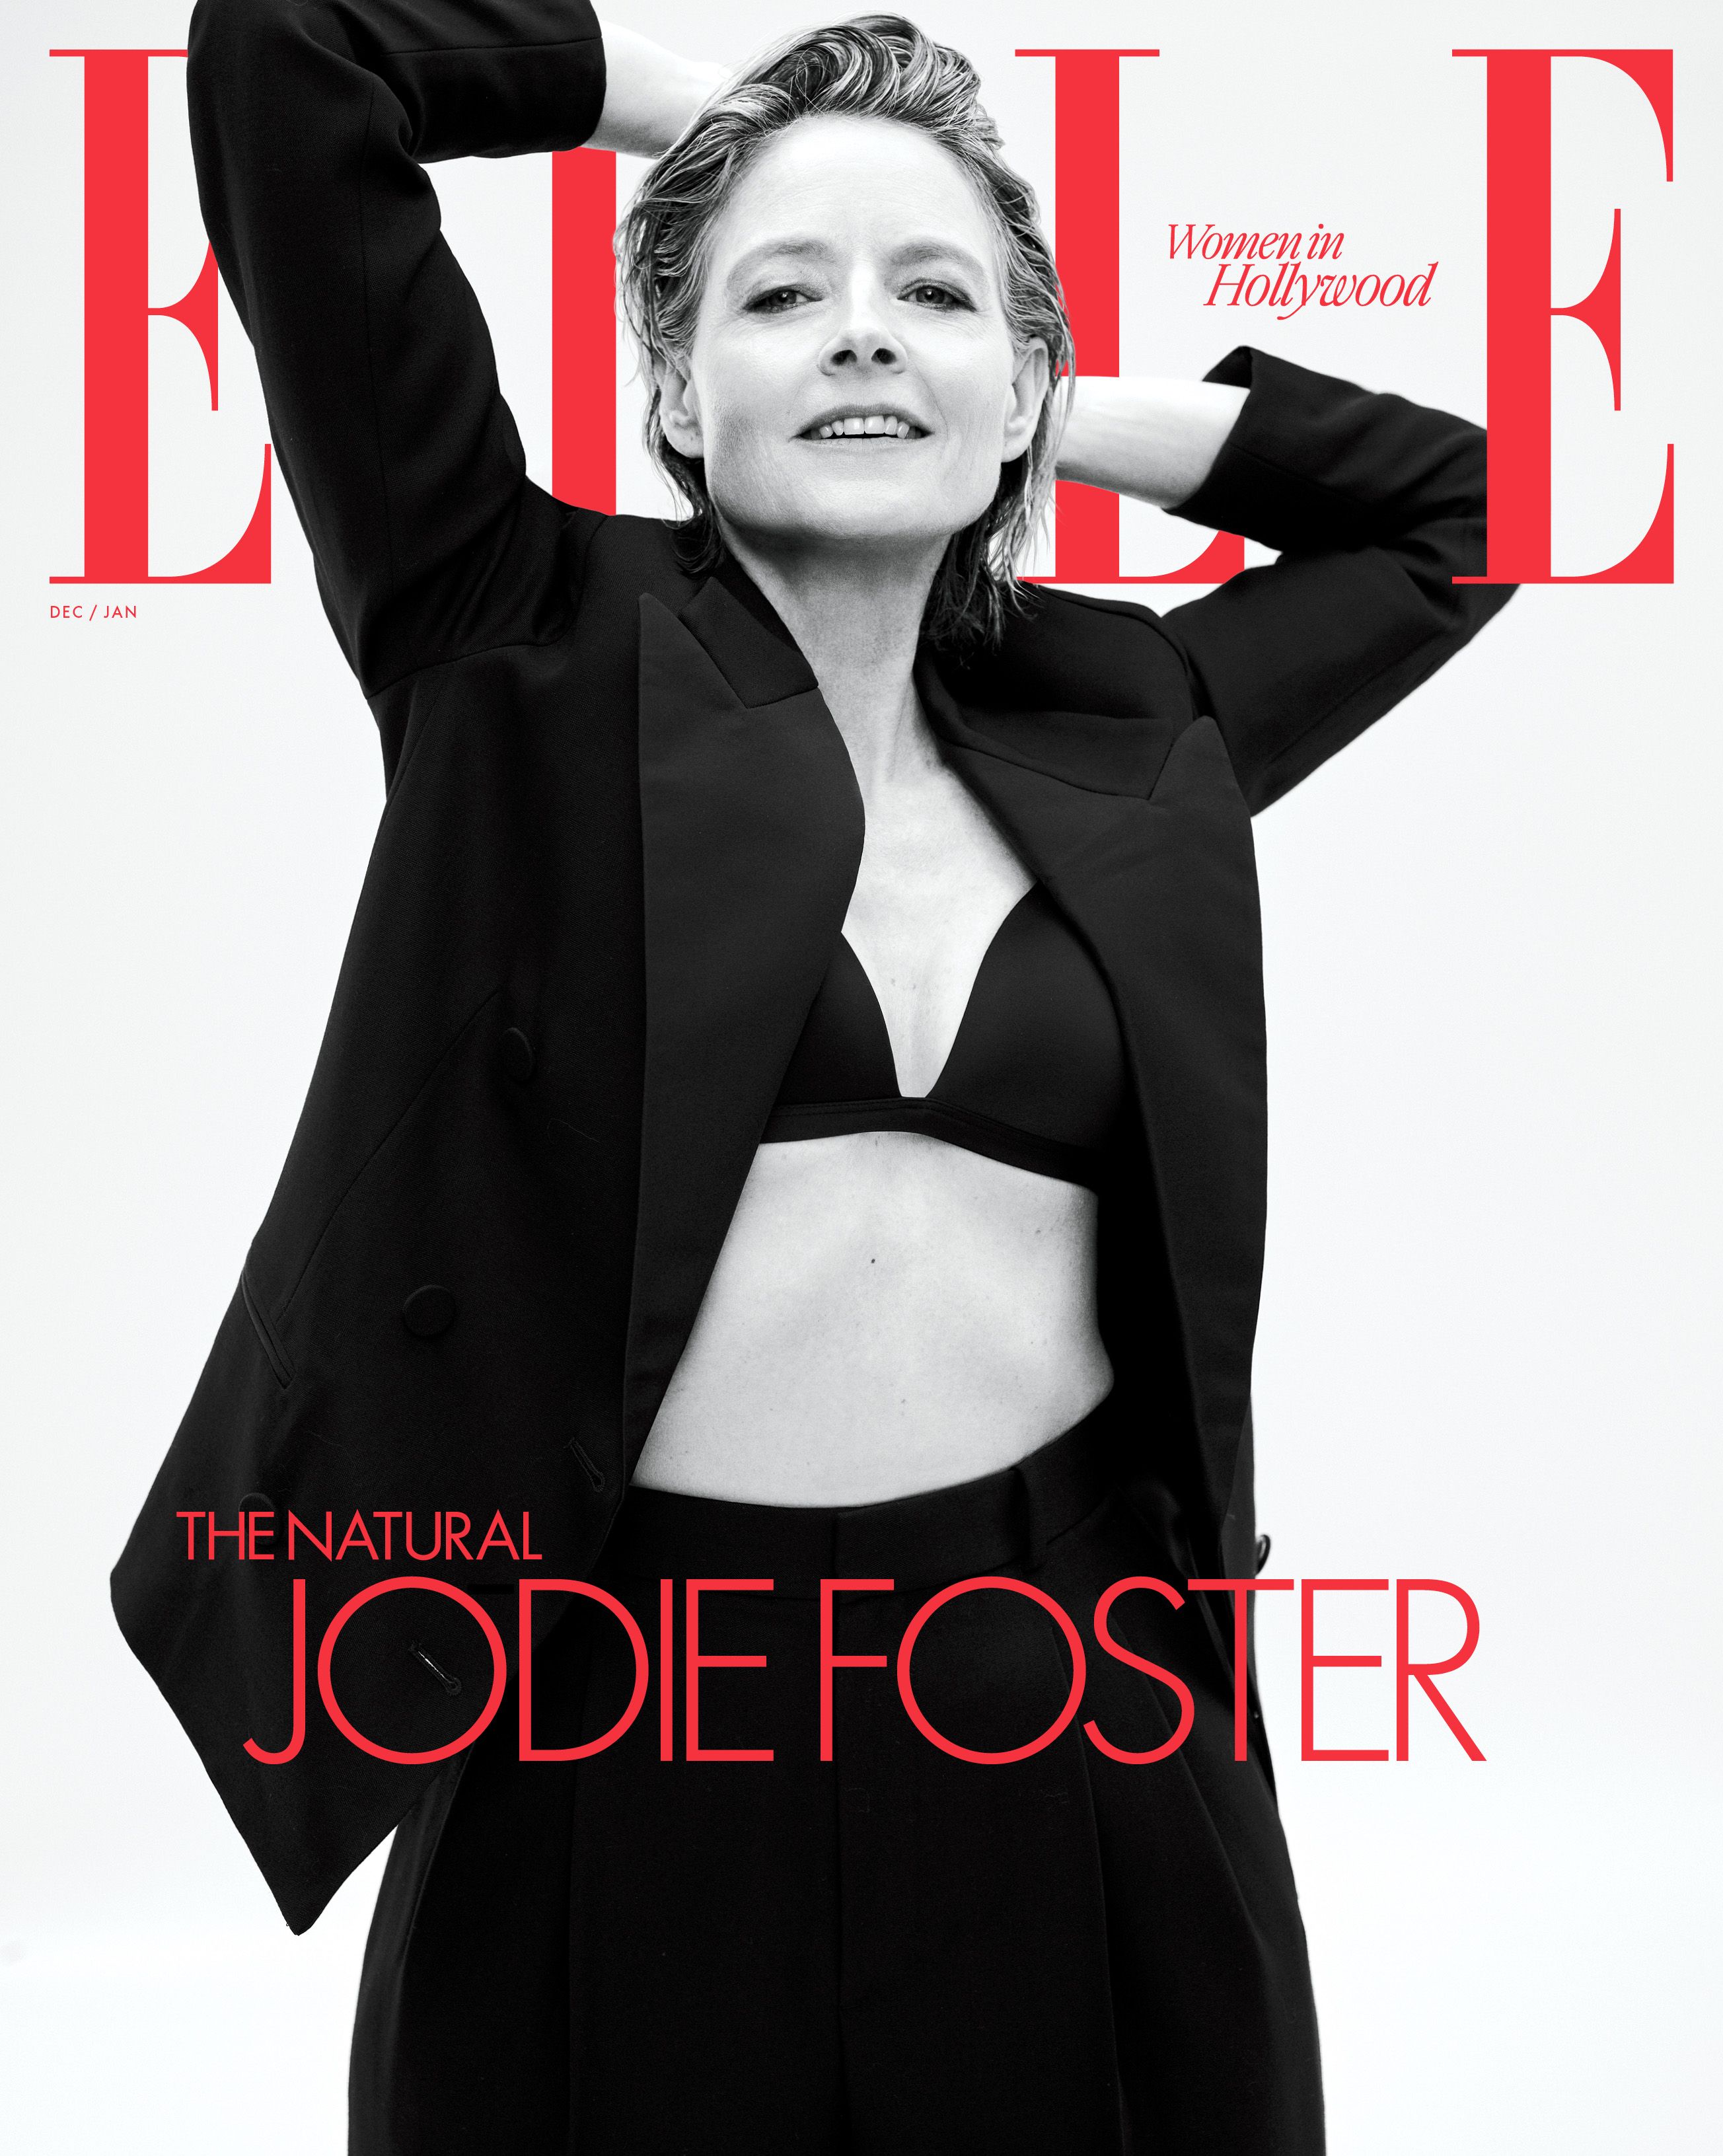 Jodie Foster, Hollywood Under the Skin, Video